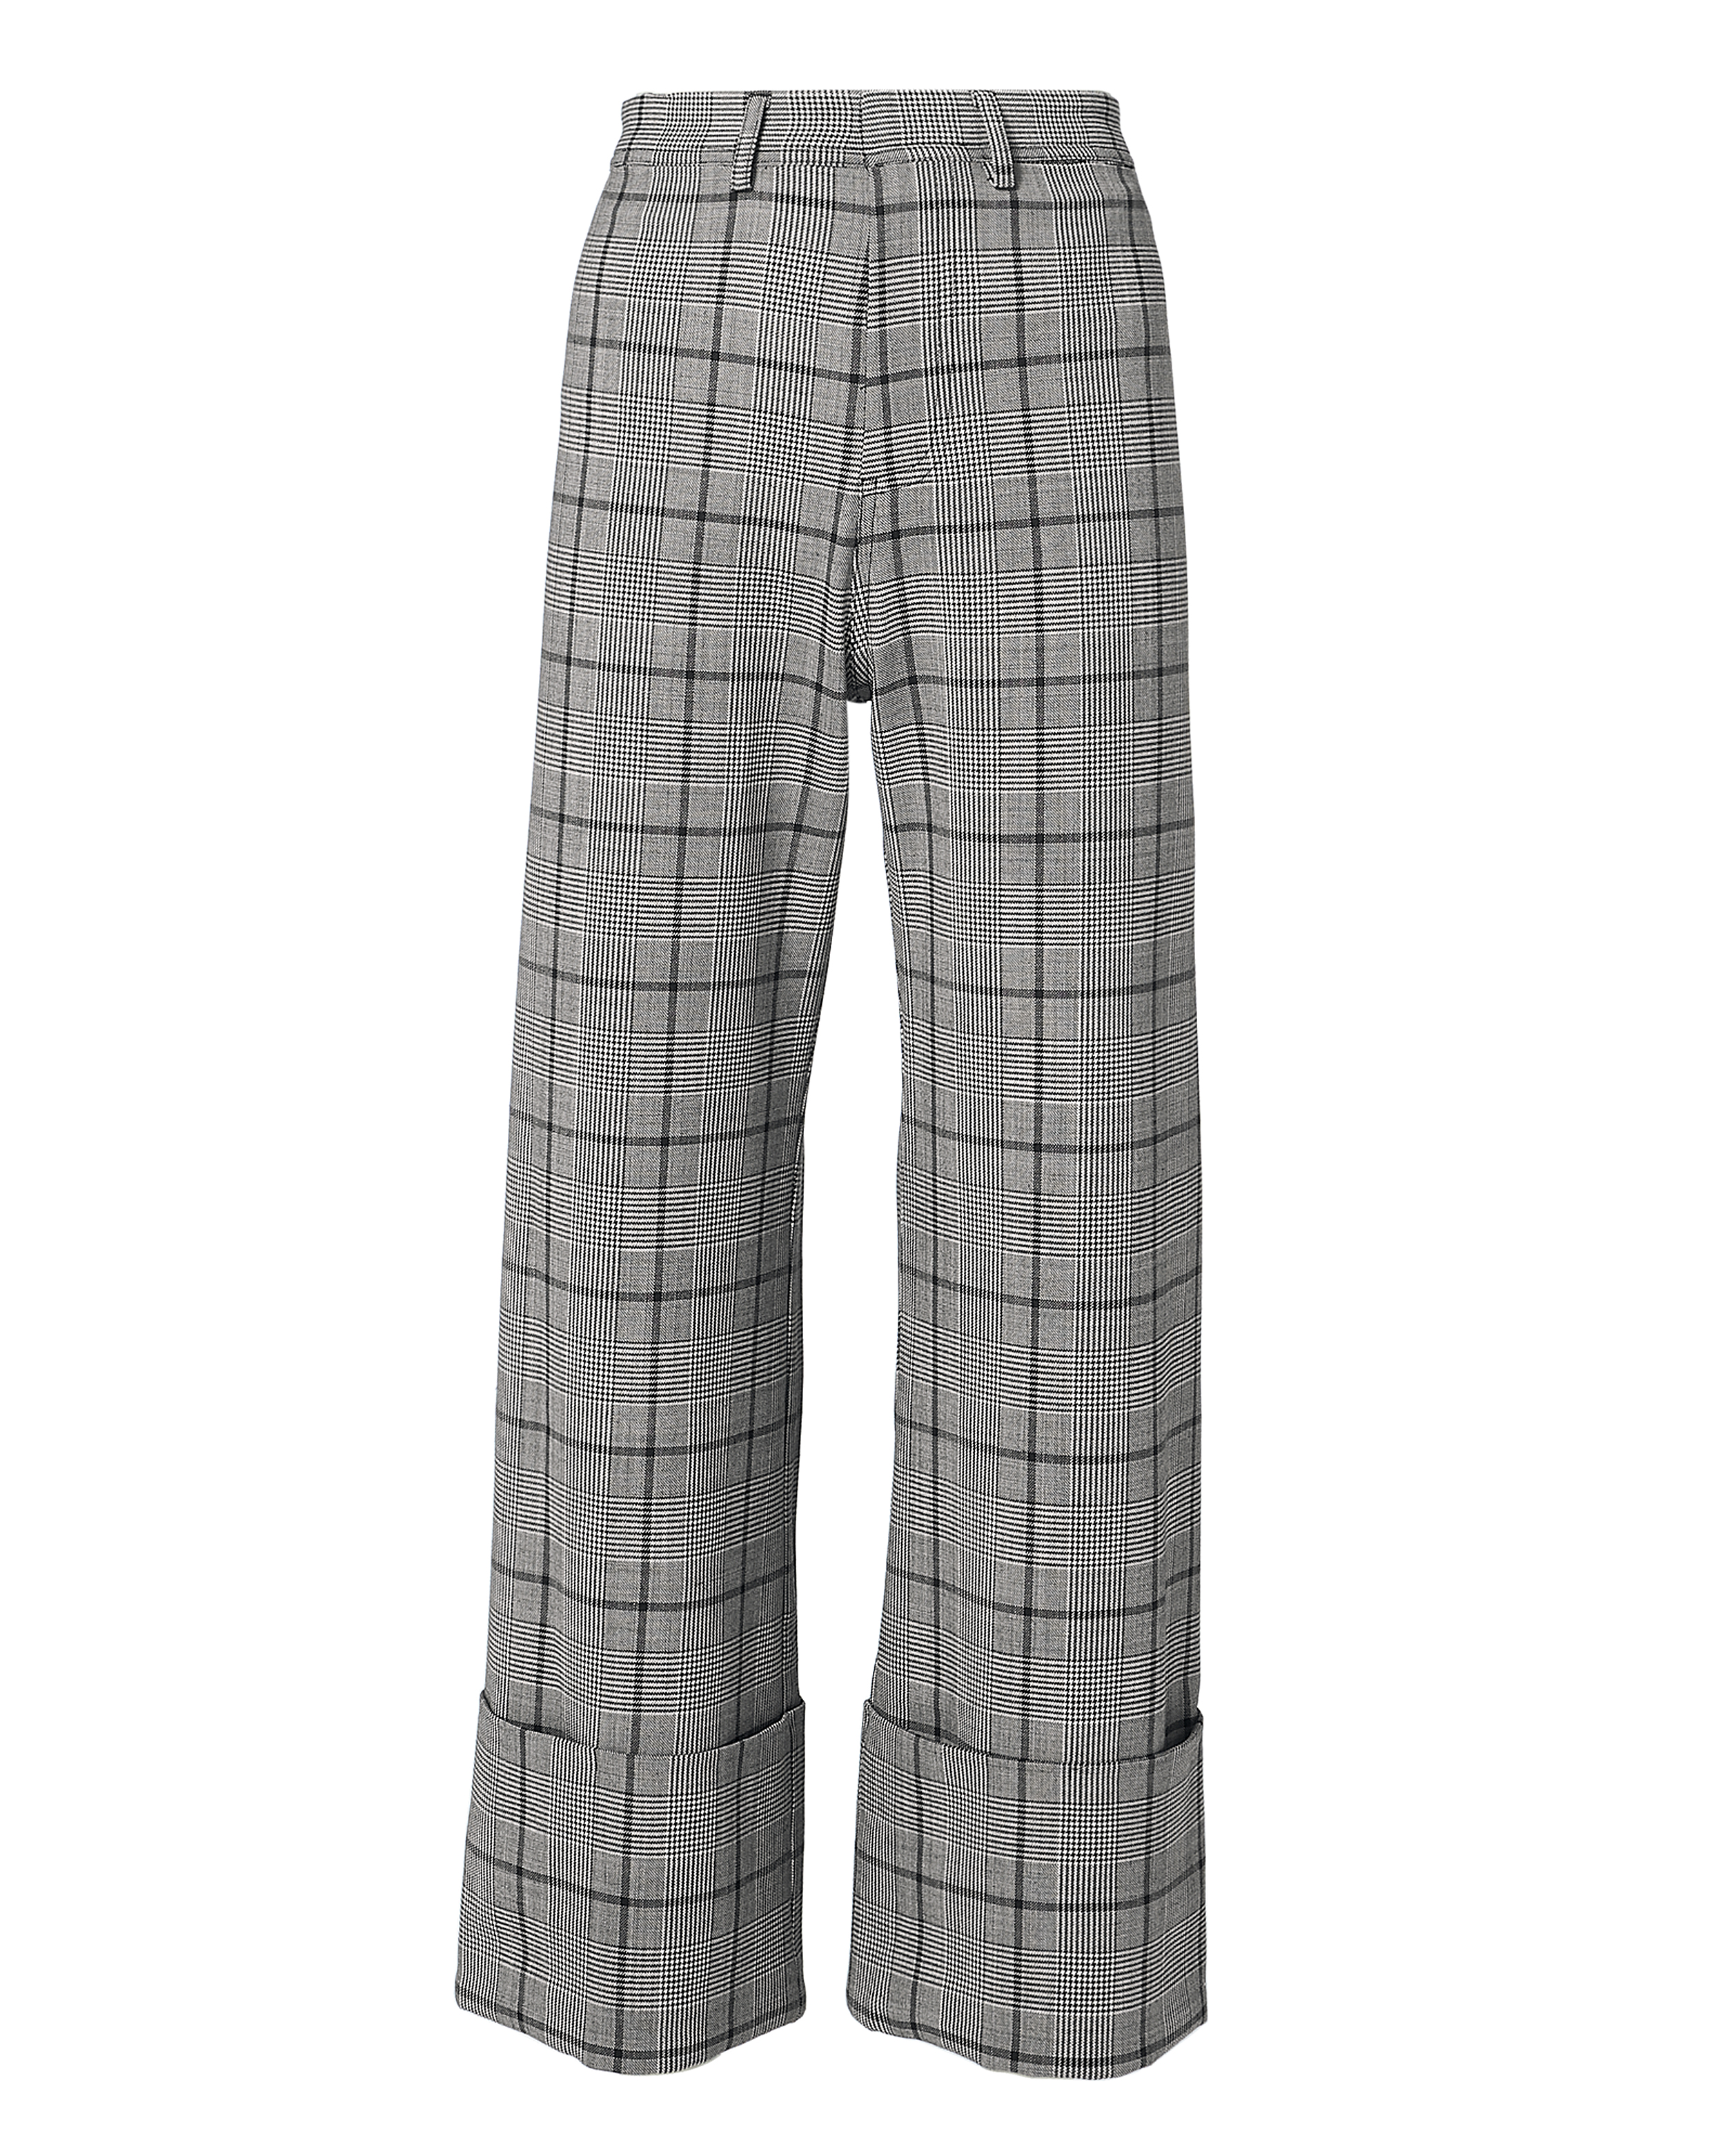 SEA Bacall Plaid Cuff Trousers,PF18-04